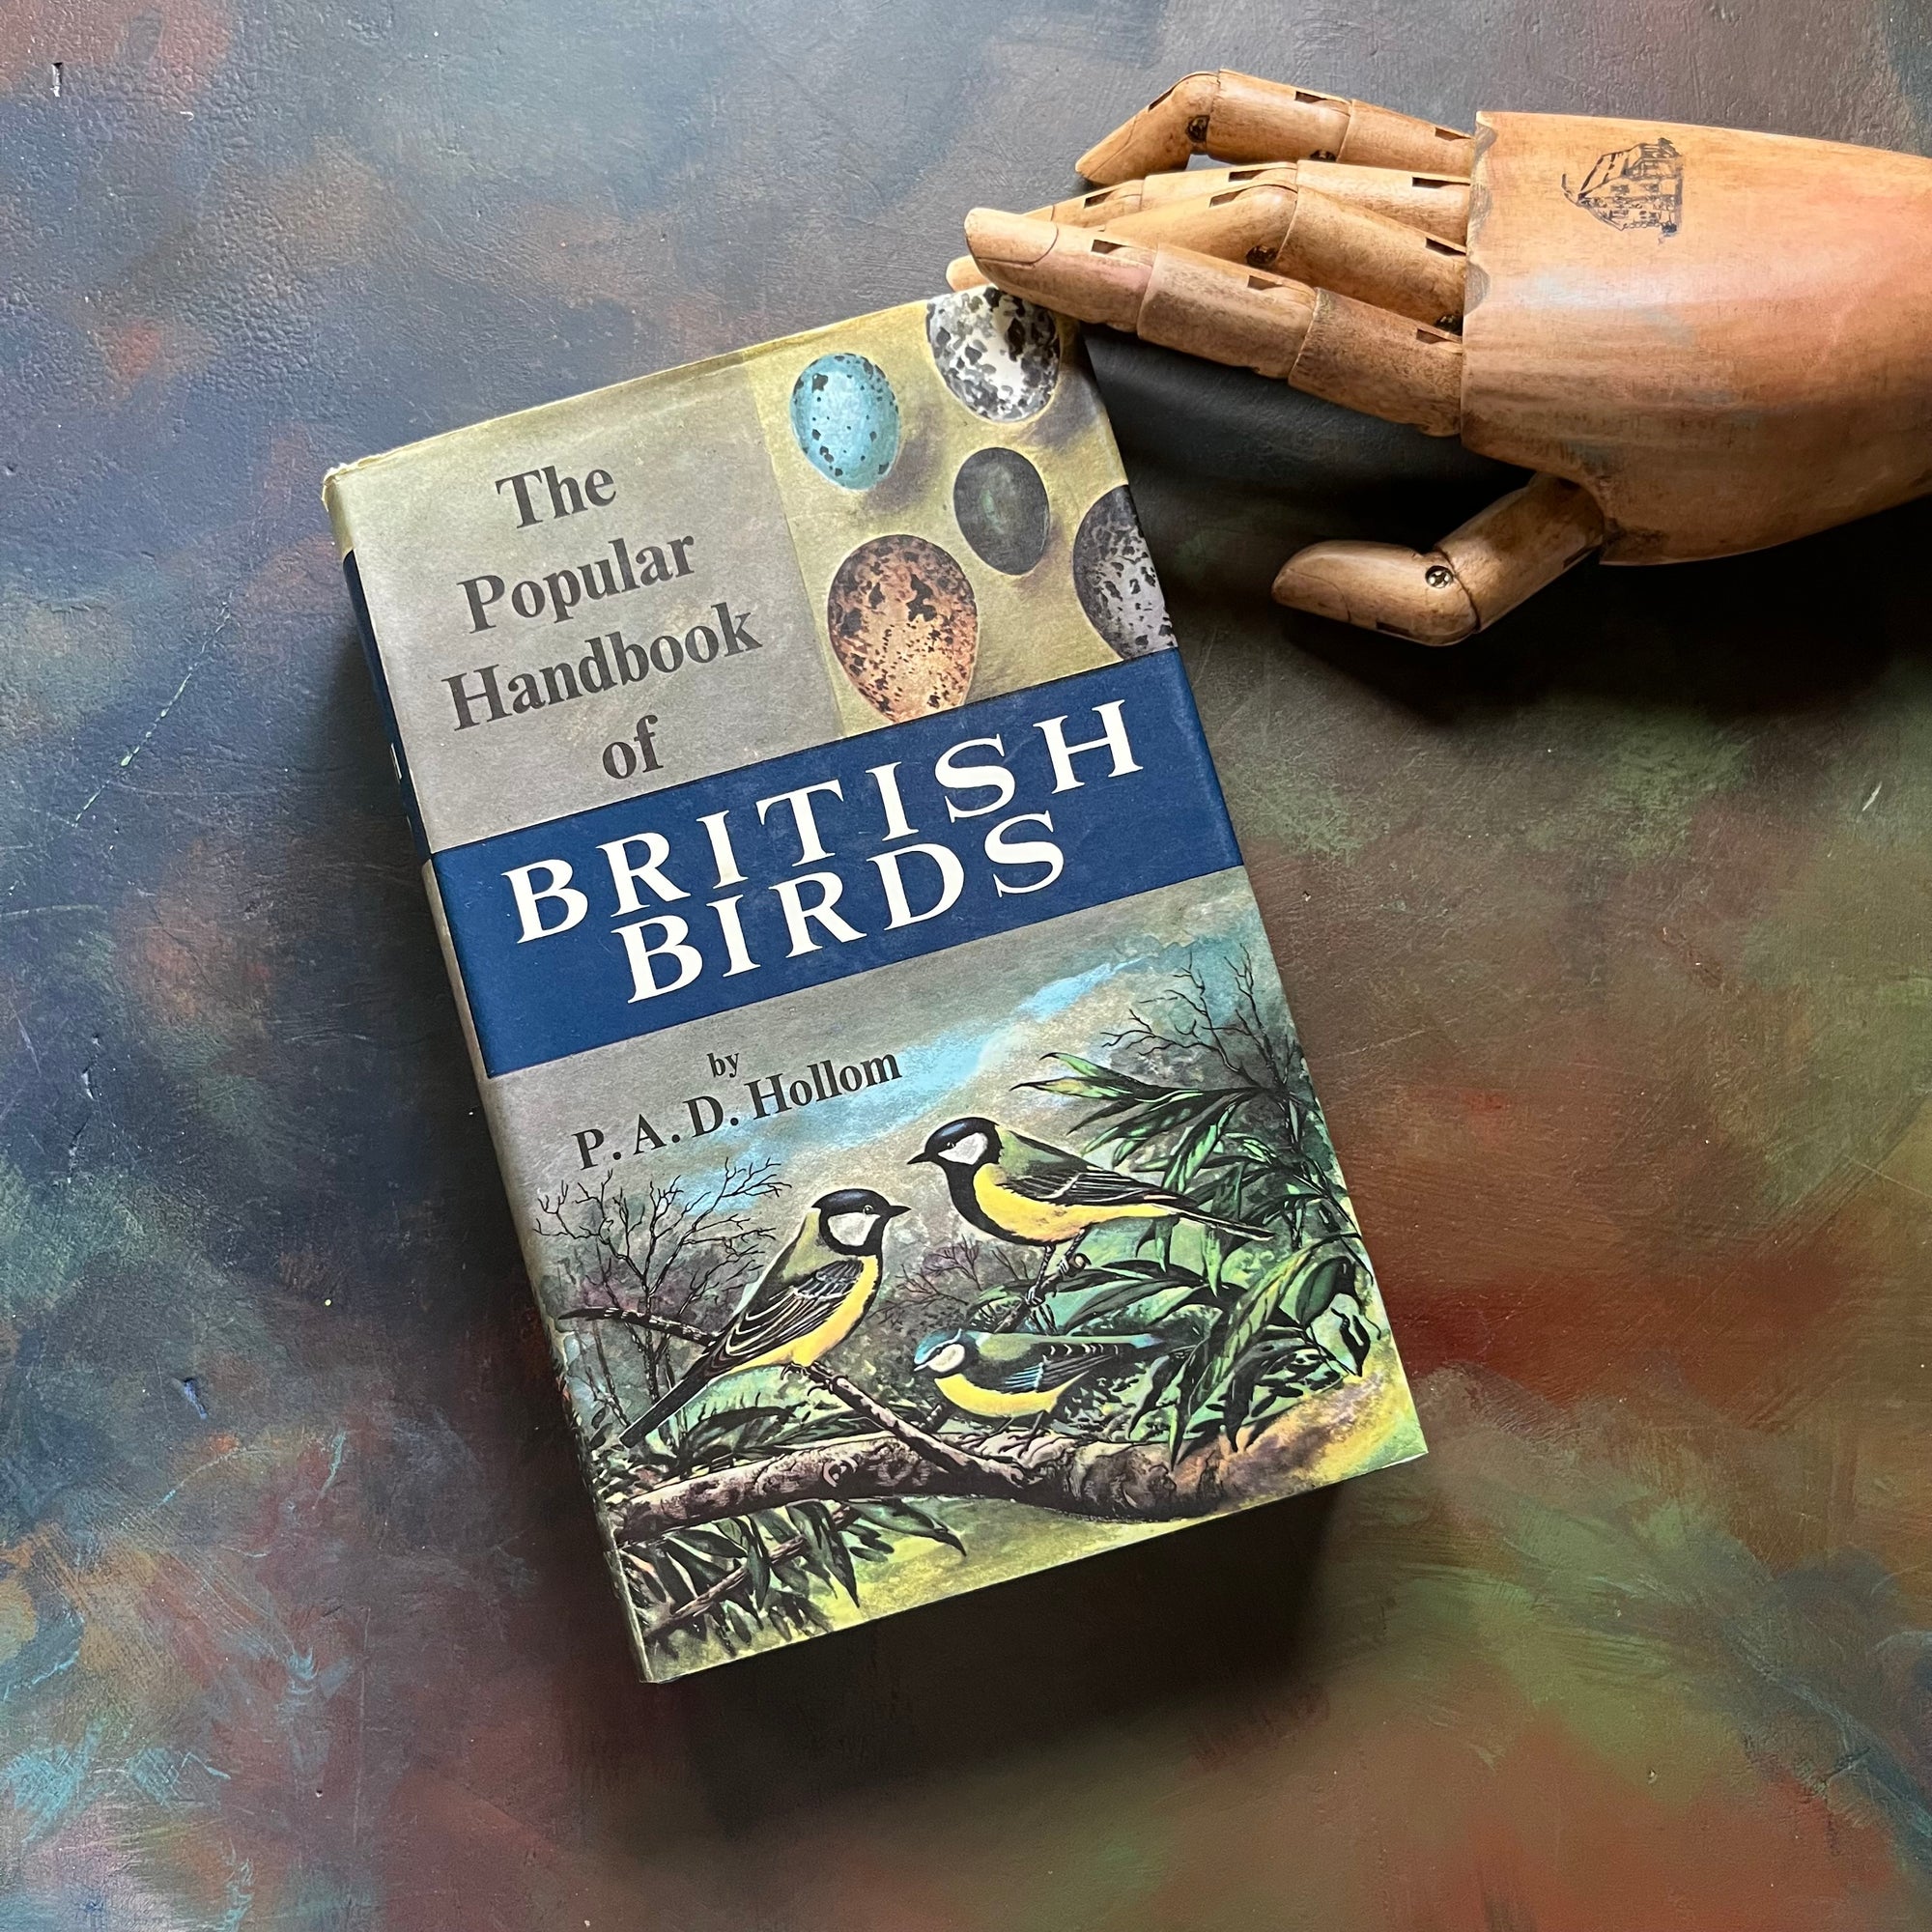 The Popular Handbook of British Birds Written by P. A. D. Hollom